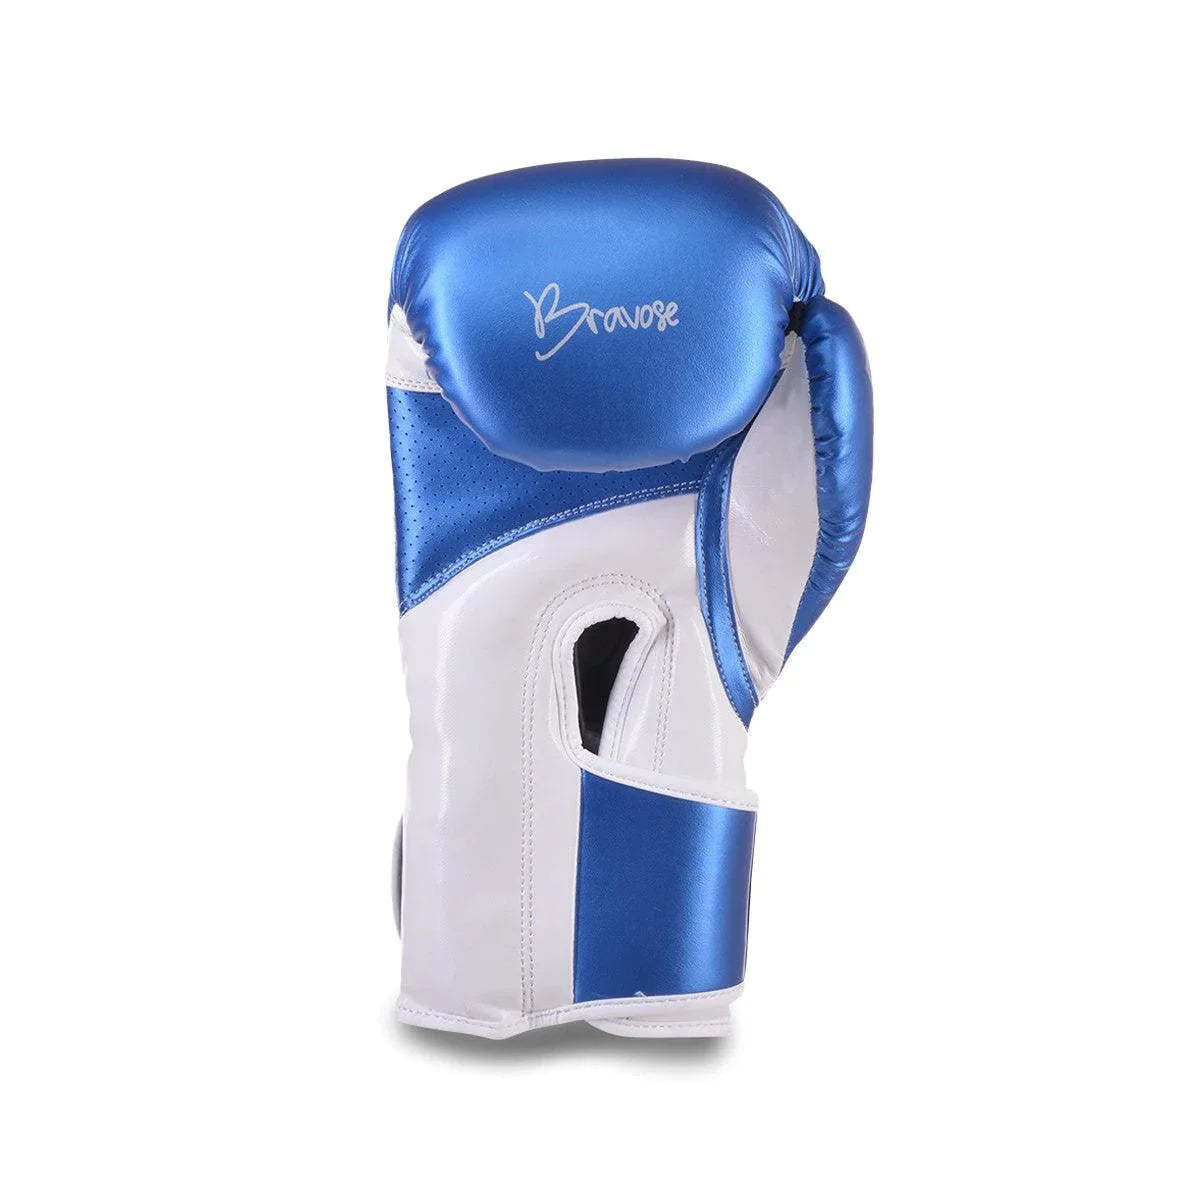 Bravose Alpha Metallic Blue Boxing Gloves